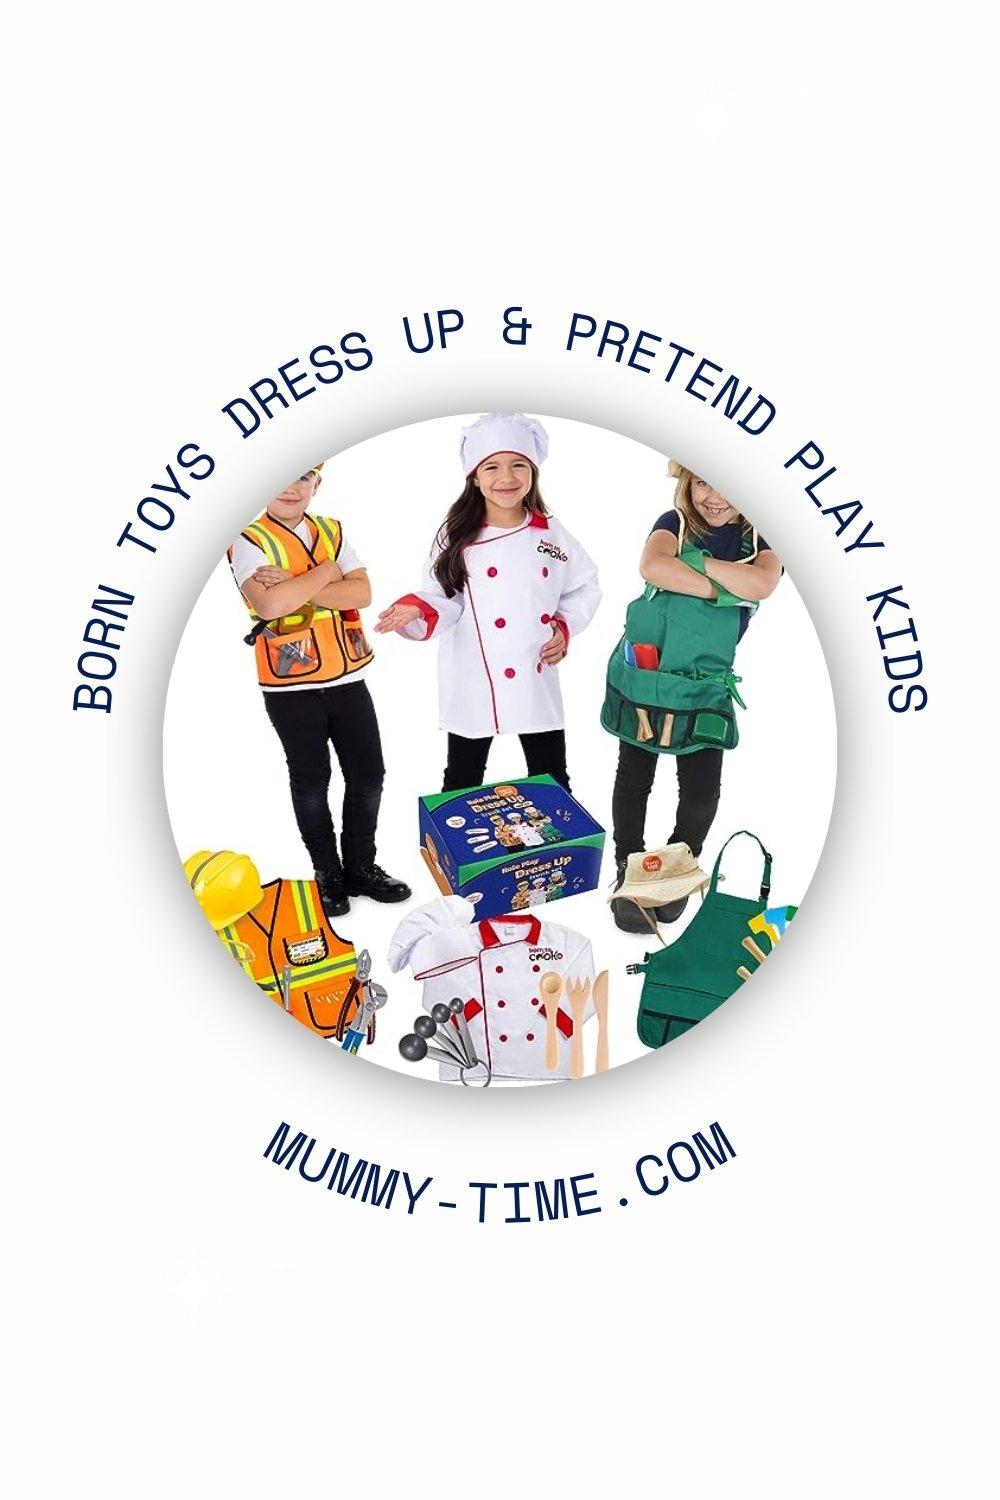 Born Toys Dress Up & Pretend Play Kids